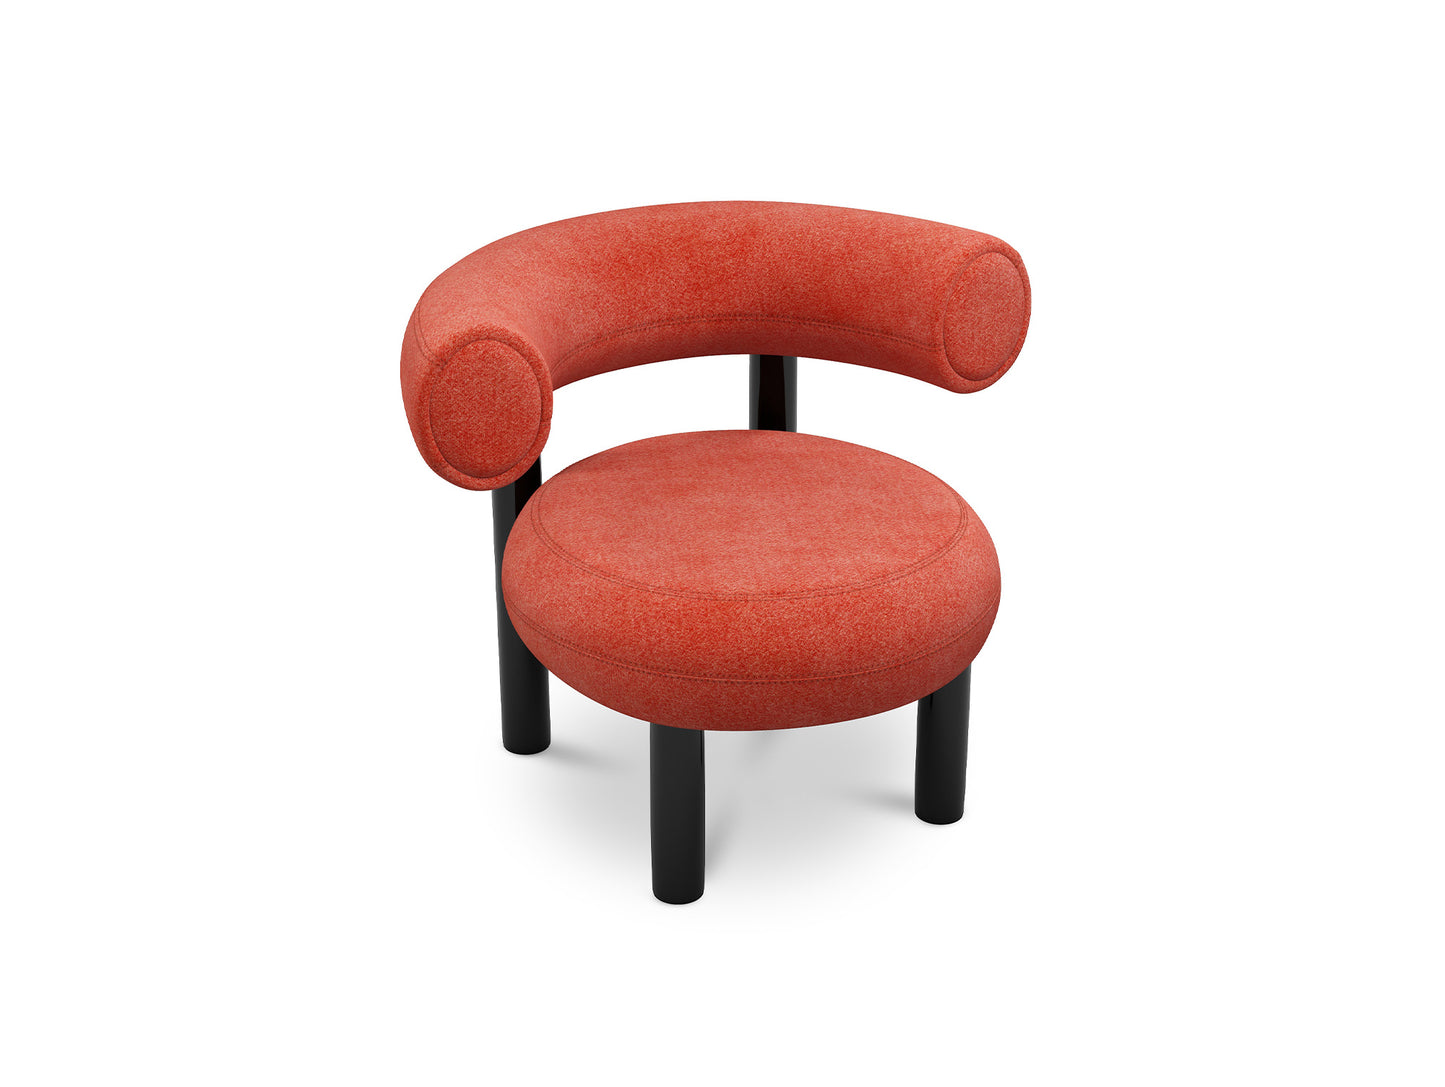 Fat Lounge Chair by Tom Dixon - Melange Nap 521